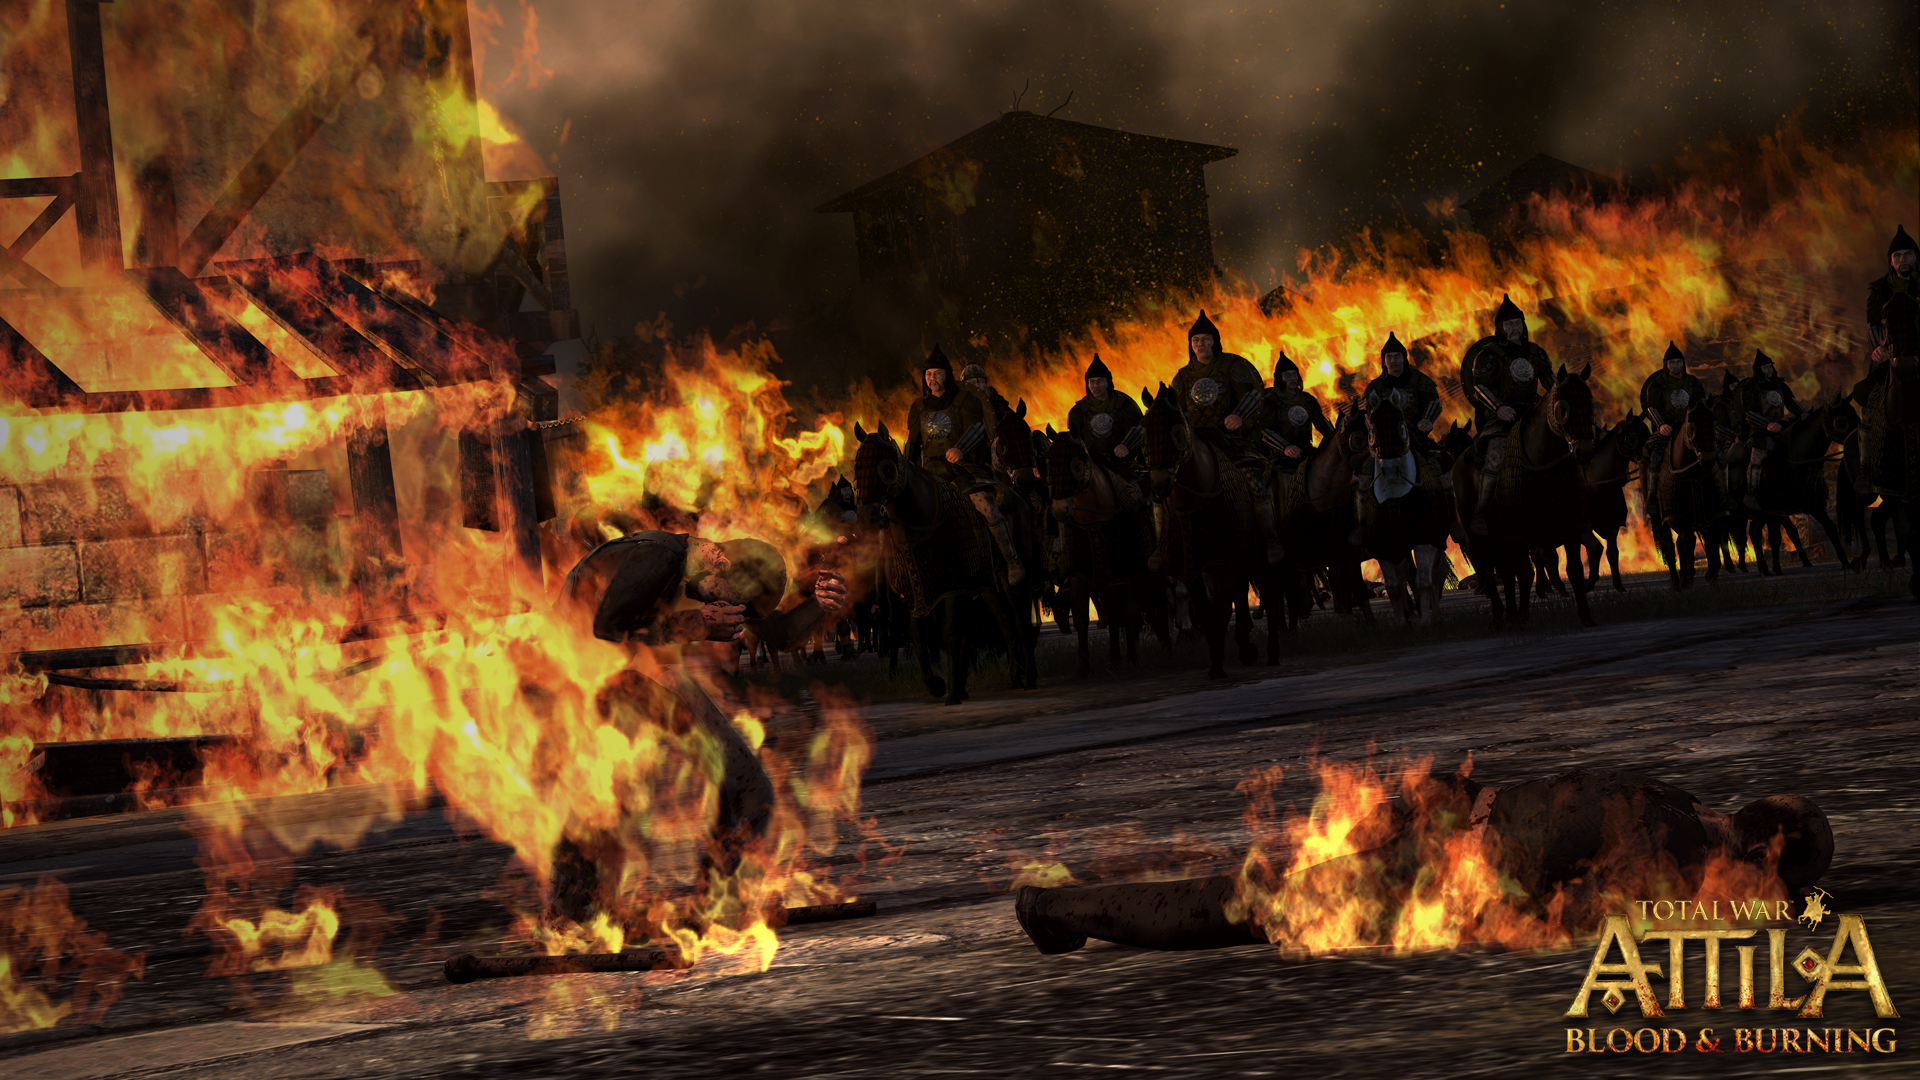 Total War Attilas Blood & Burning DLC brings violence and vomit